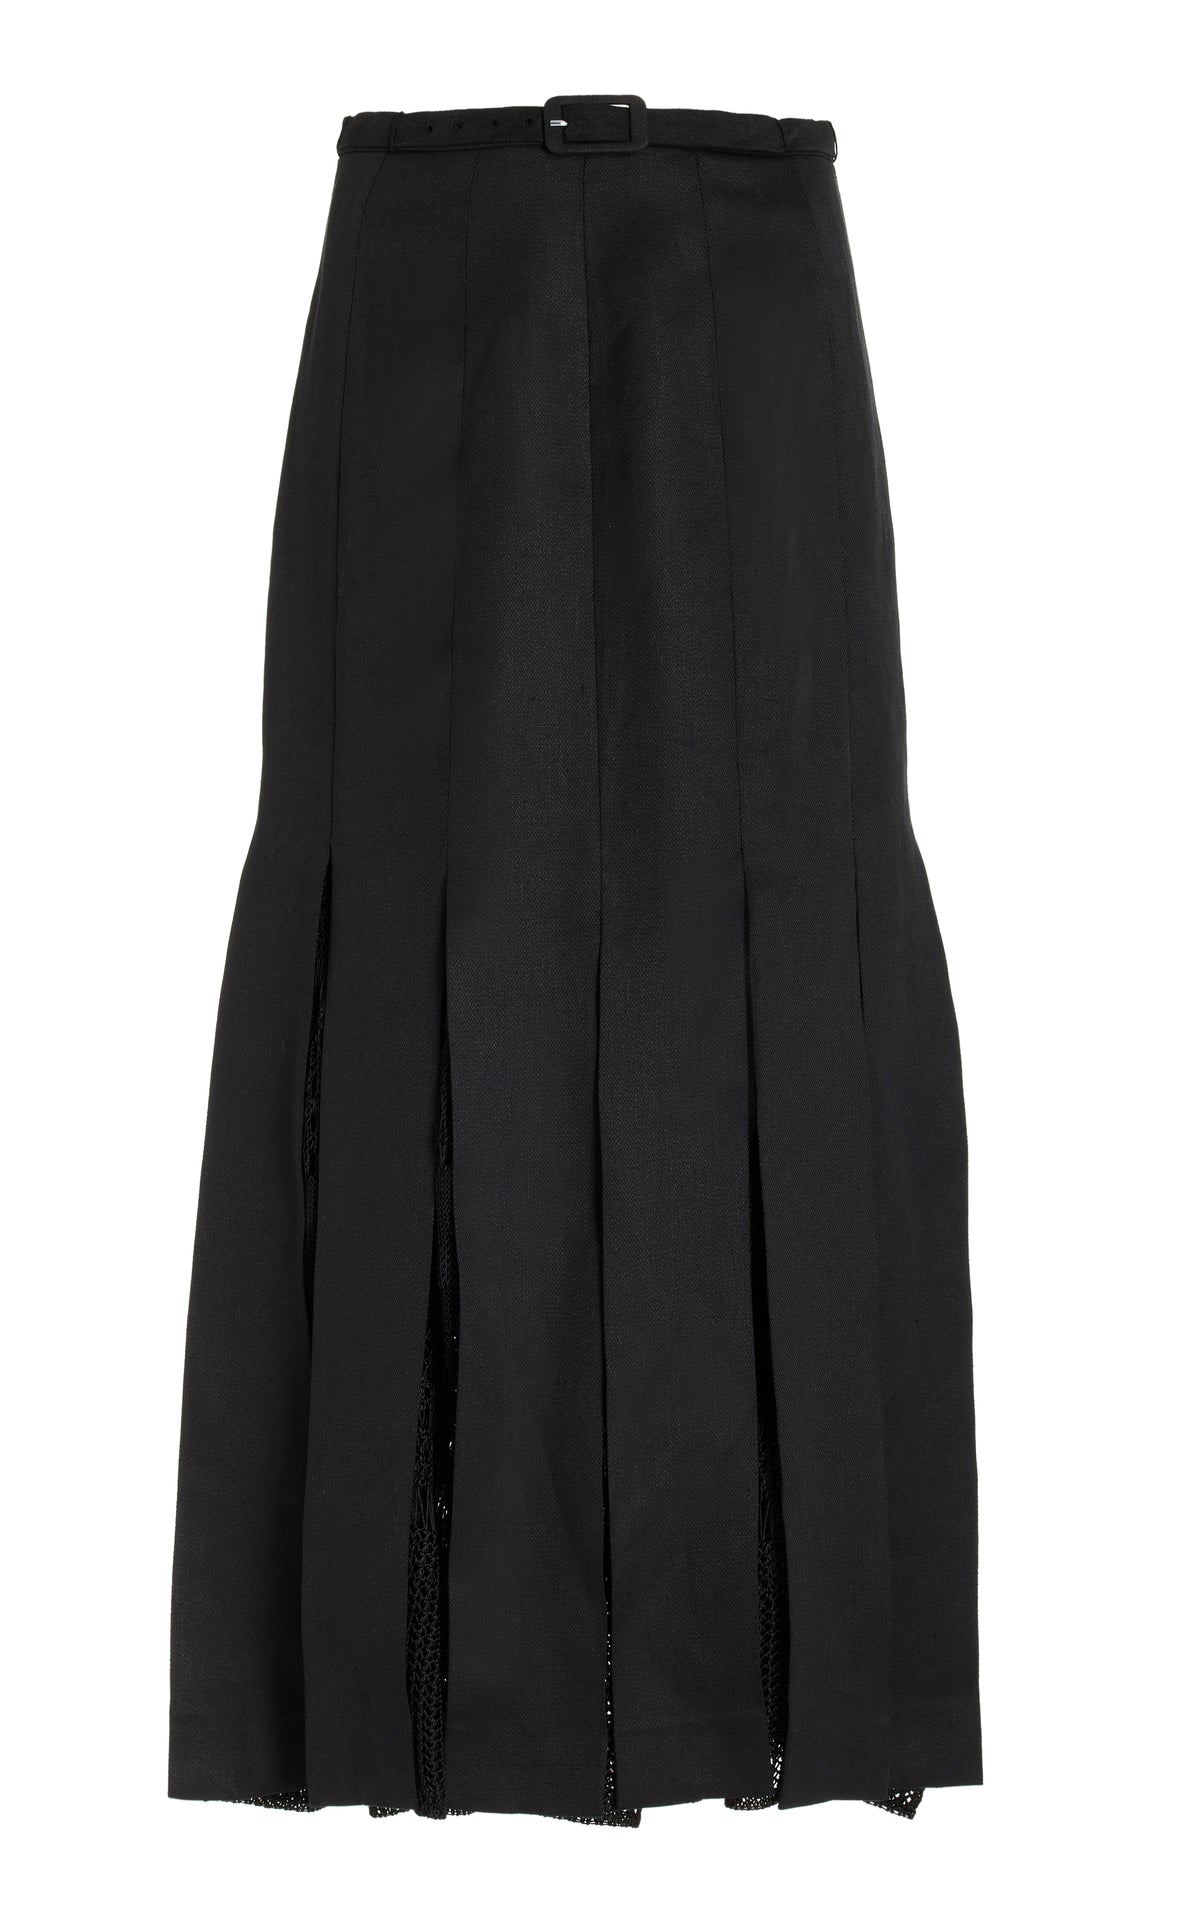 Edith Pleated Skirt in Black Textured Linen